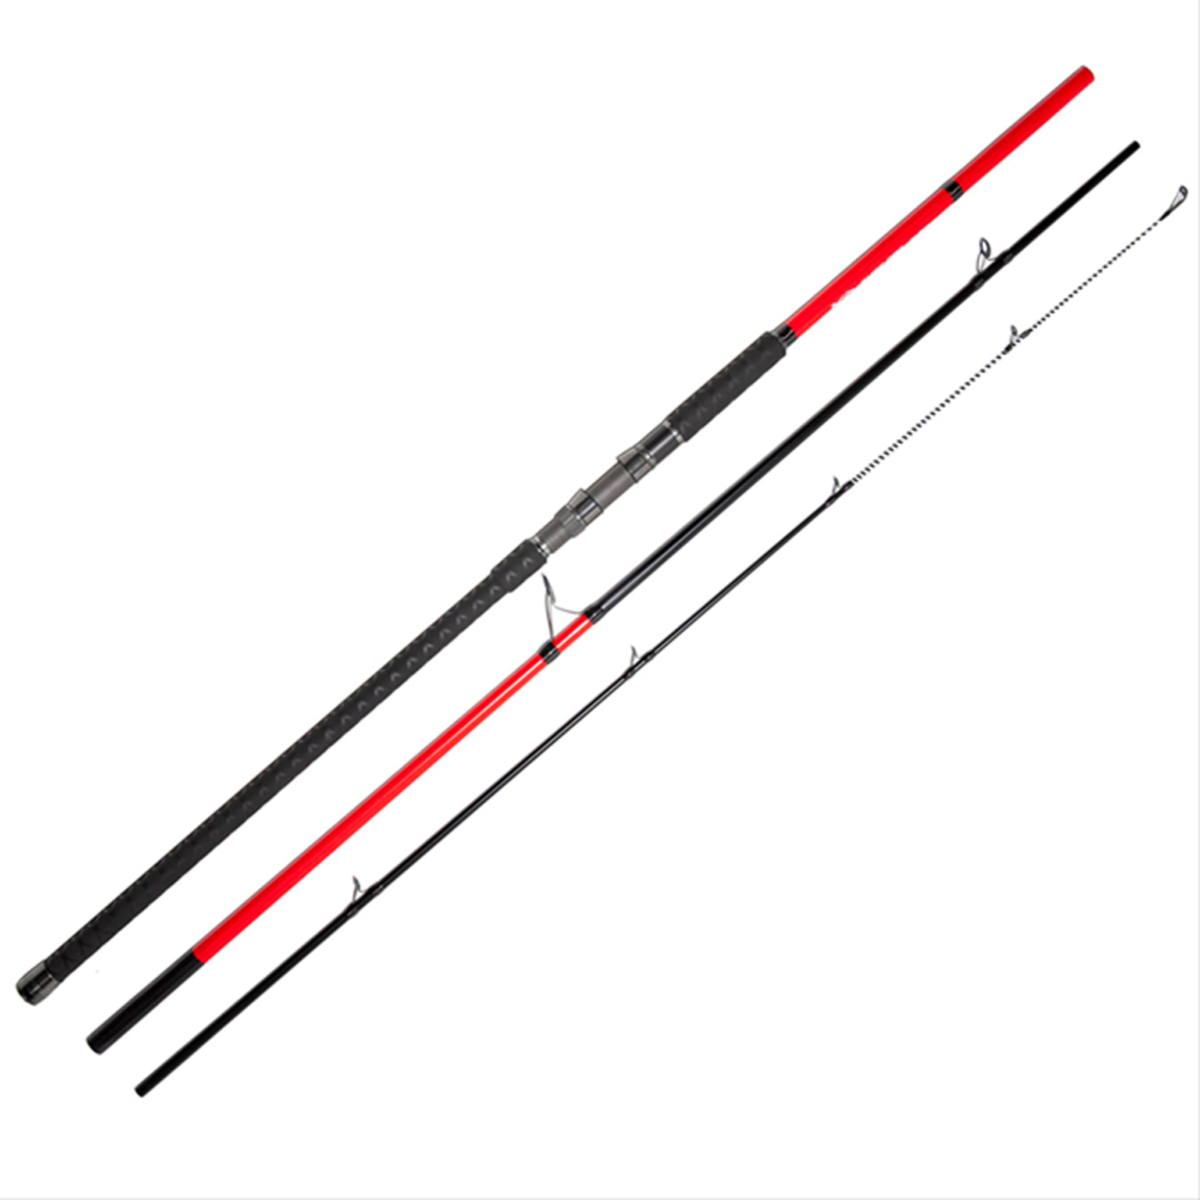 Daiwa Ardito Surf Travel Fishing Rods - Black/red : Target